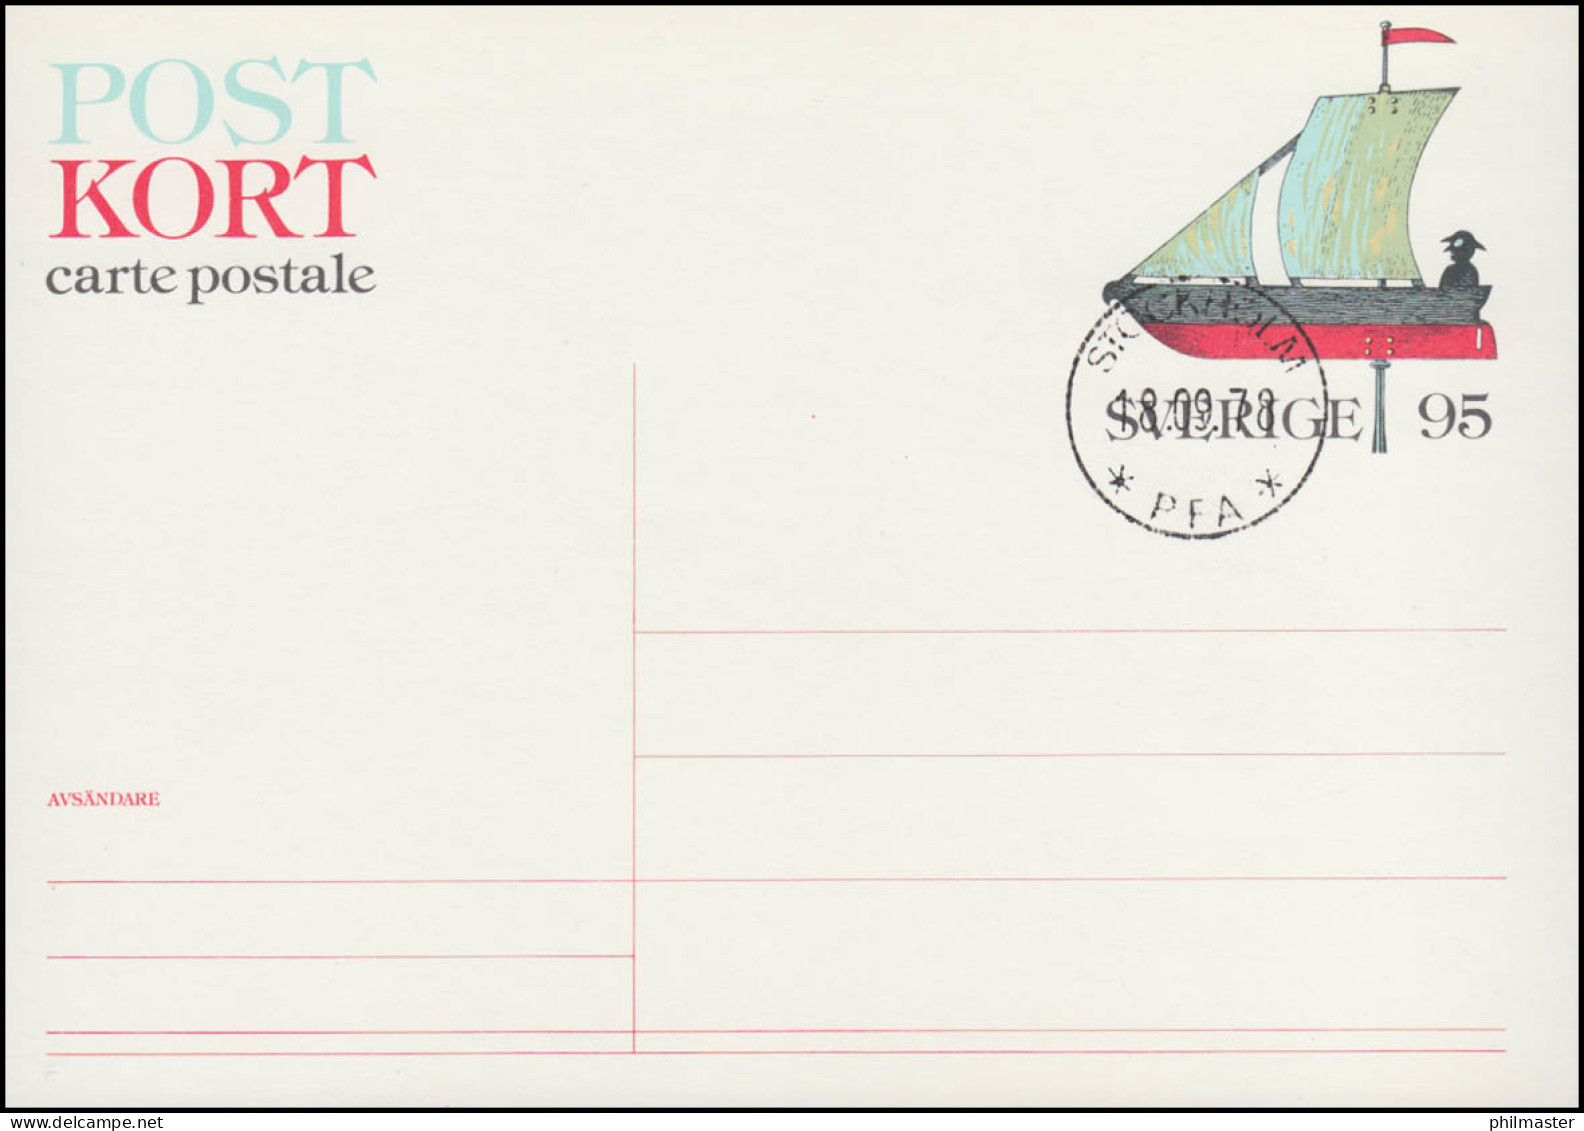 Schweden Postkarte P 100 Segelboot 95 Öre 1977, Gestempelt - Postal Stationery